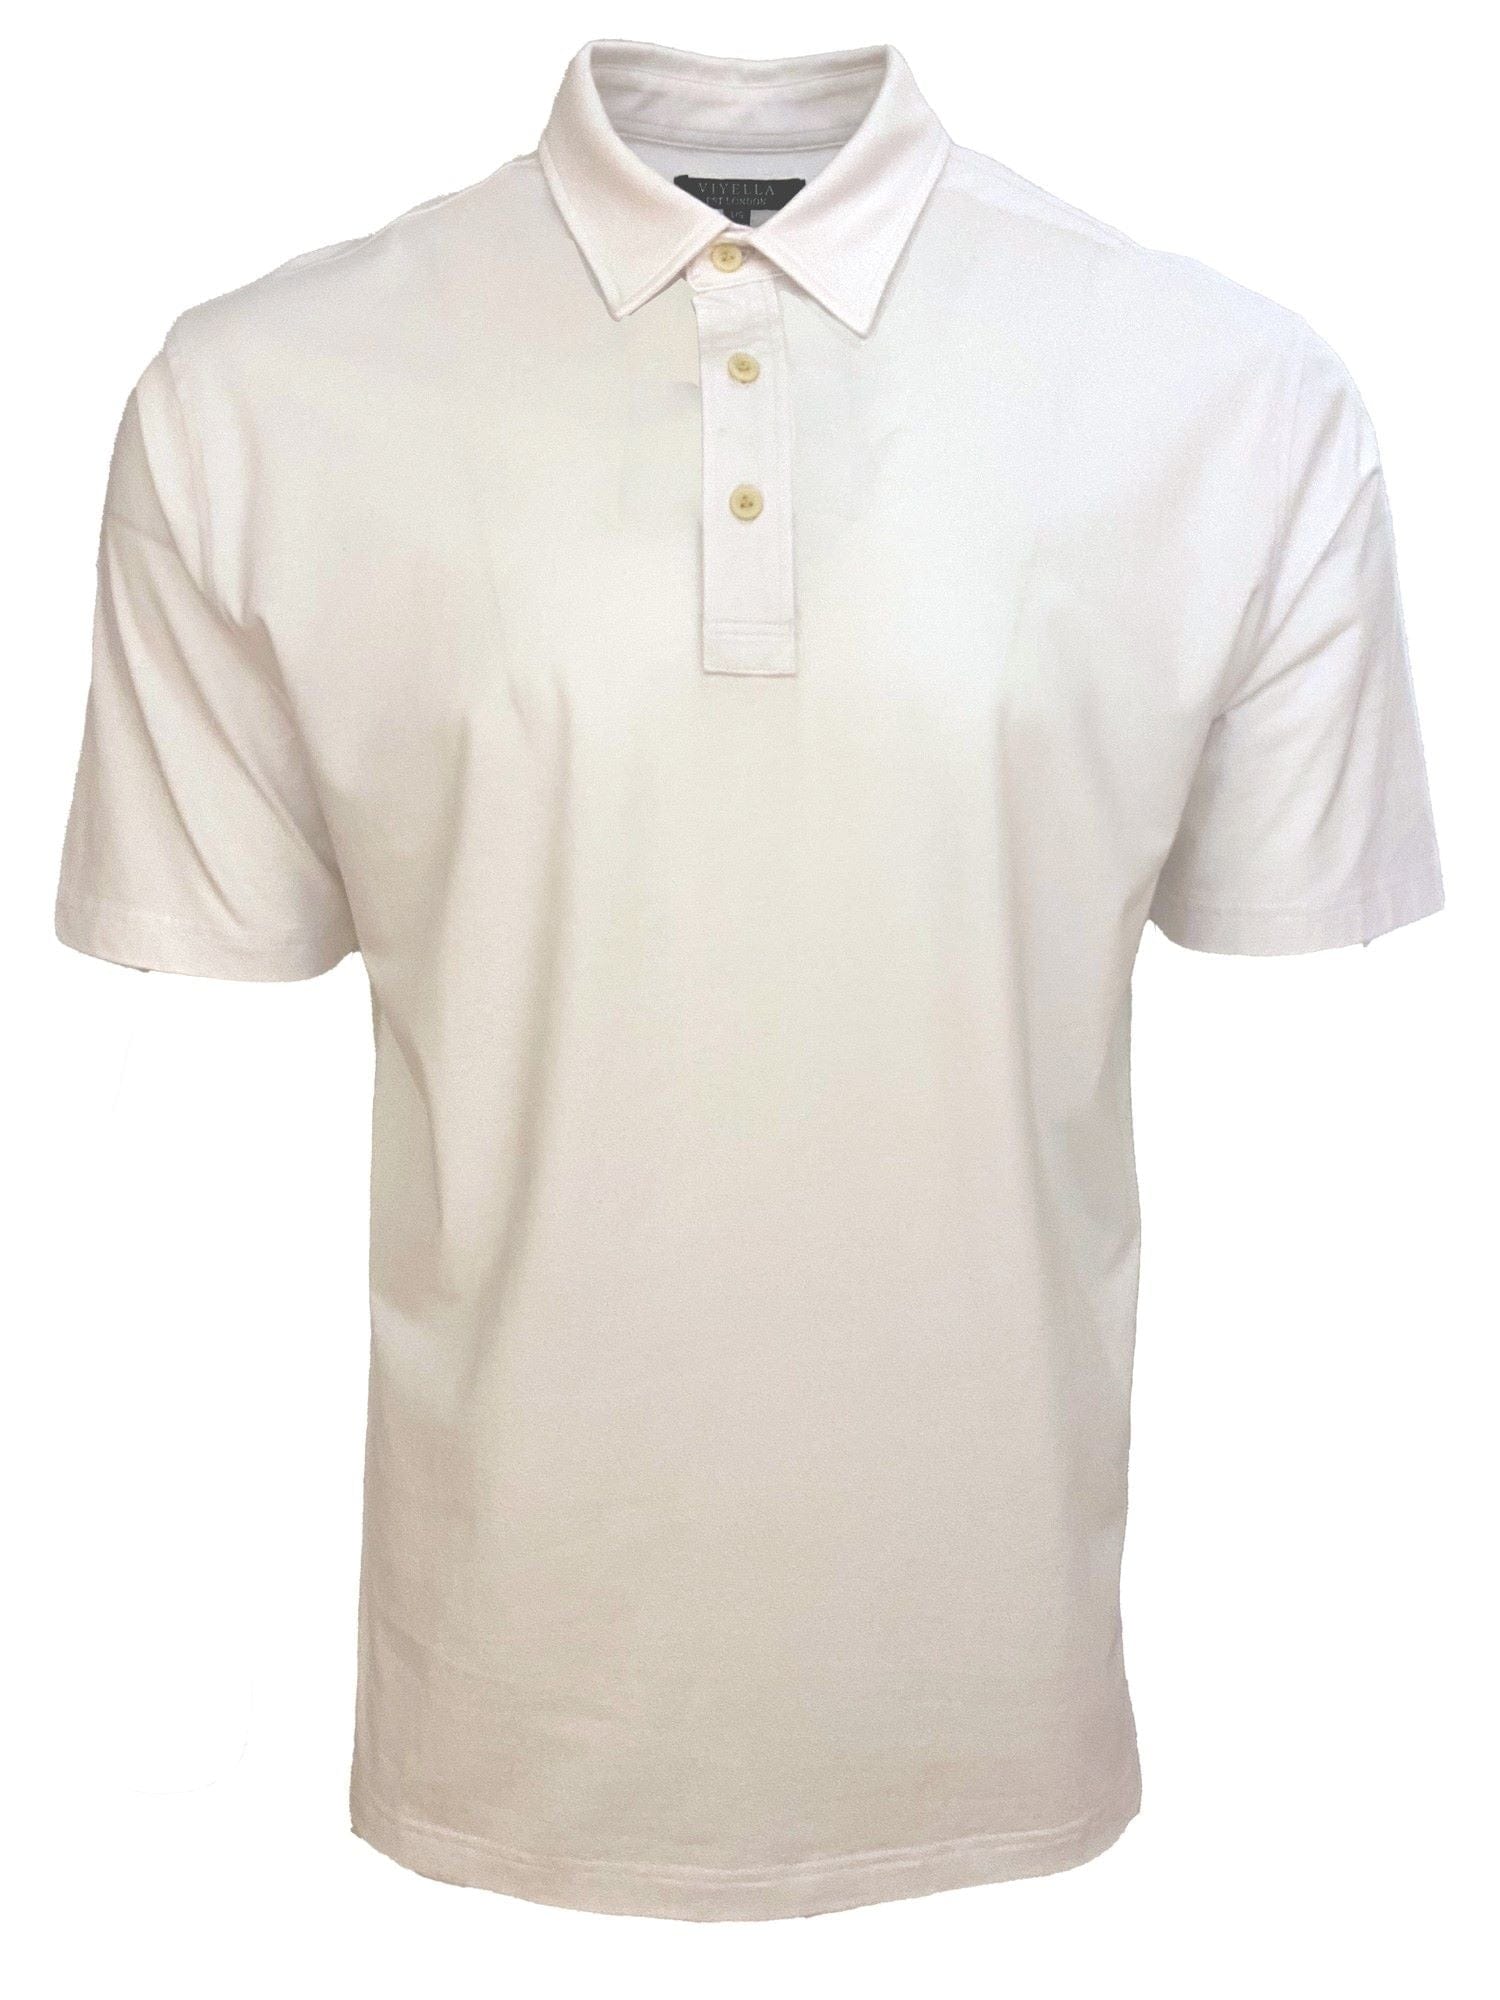 Viyella White Golf Shirts for Men